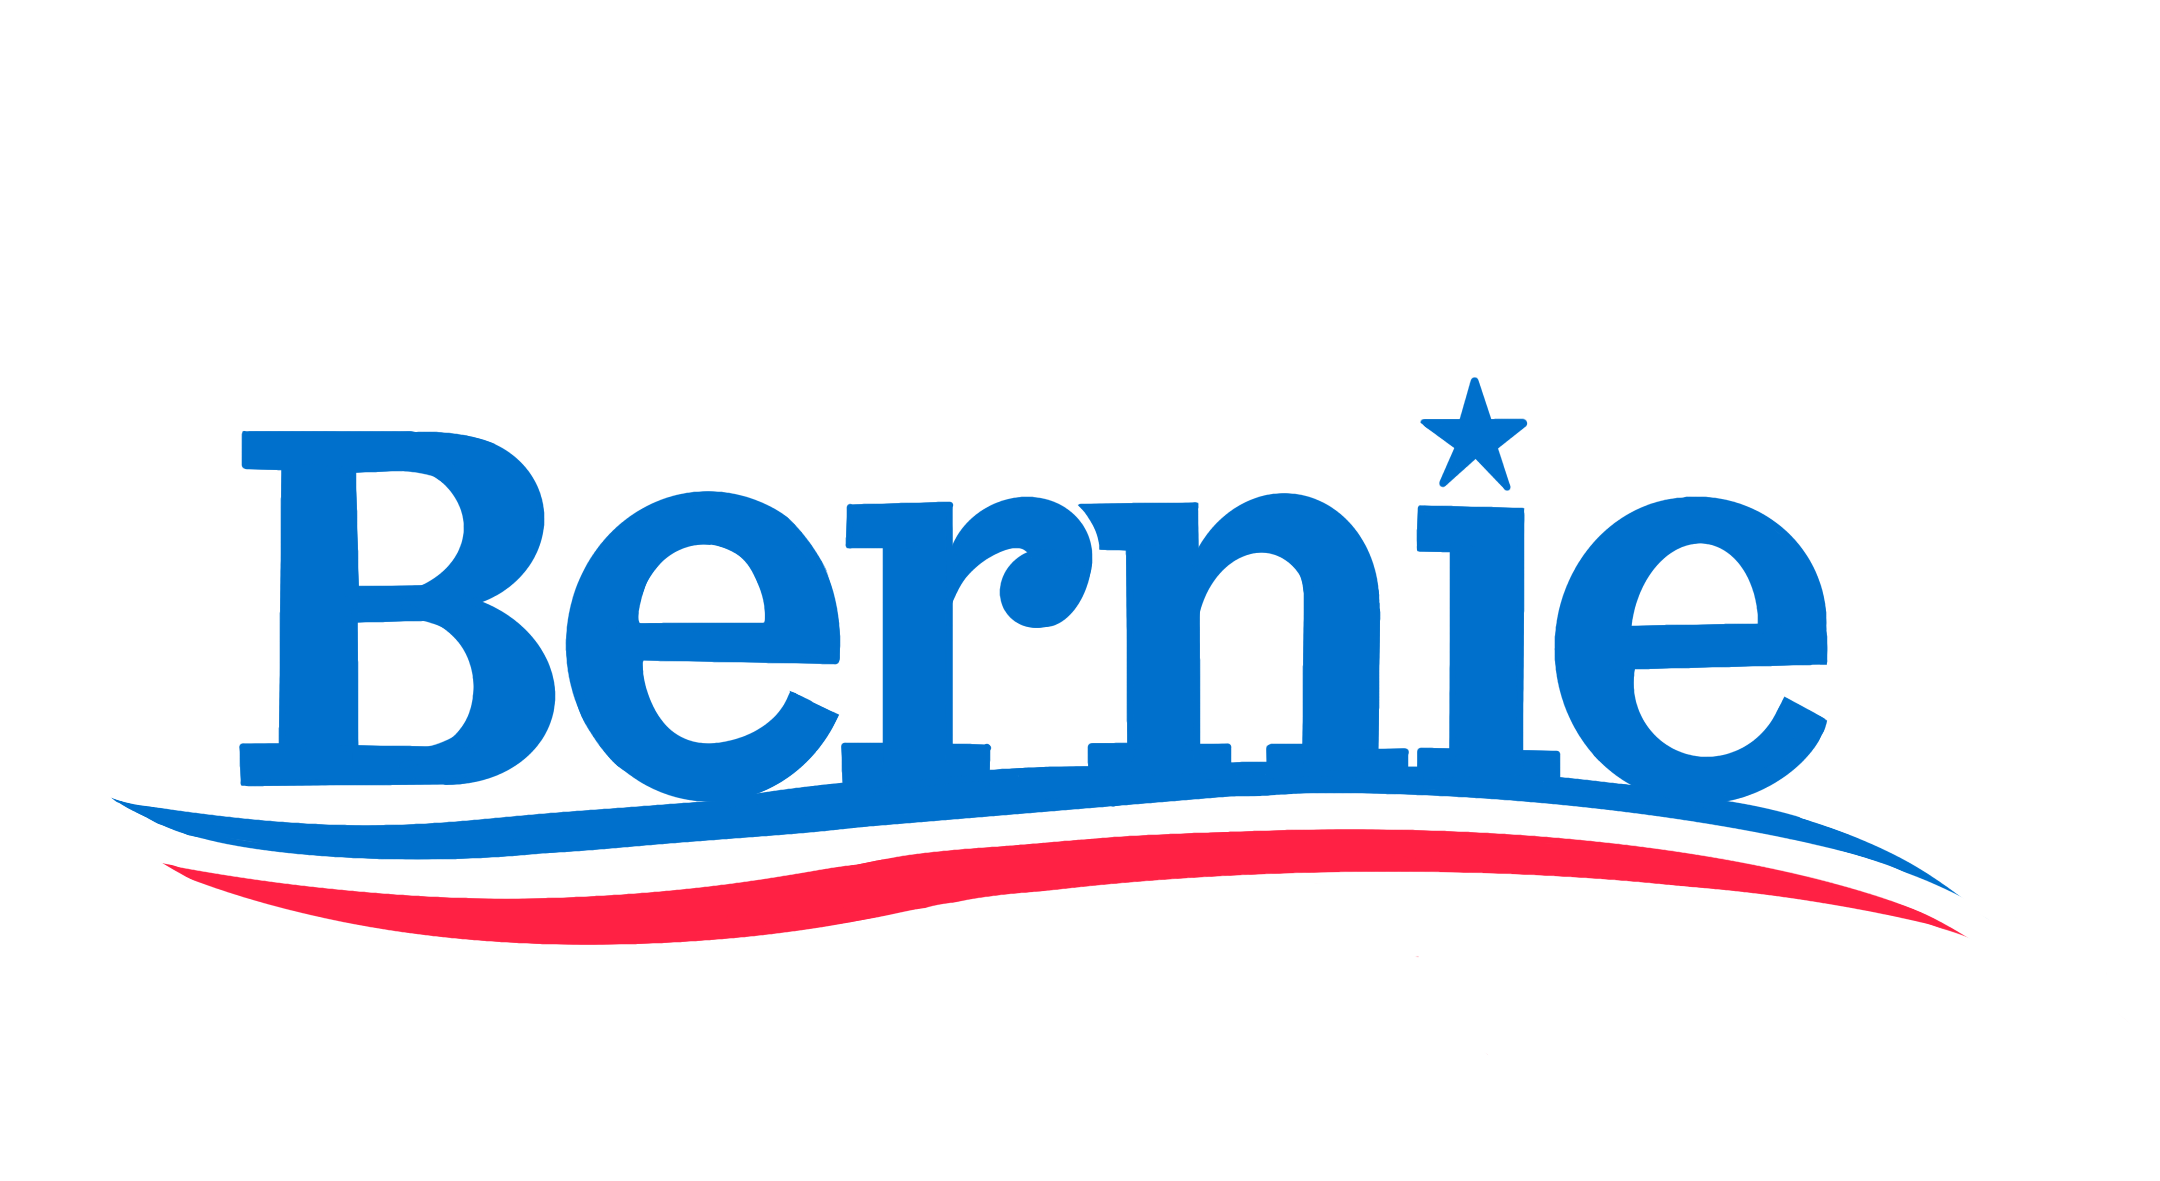 High Quality Bernie logo poster HD Blank Meme Template